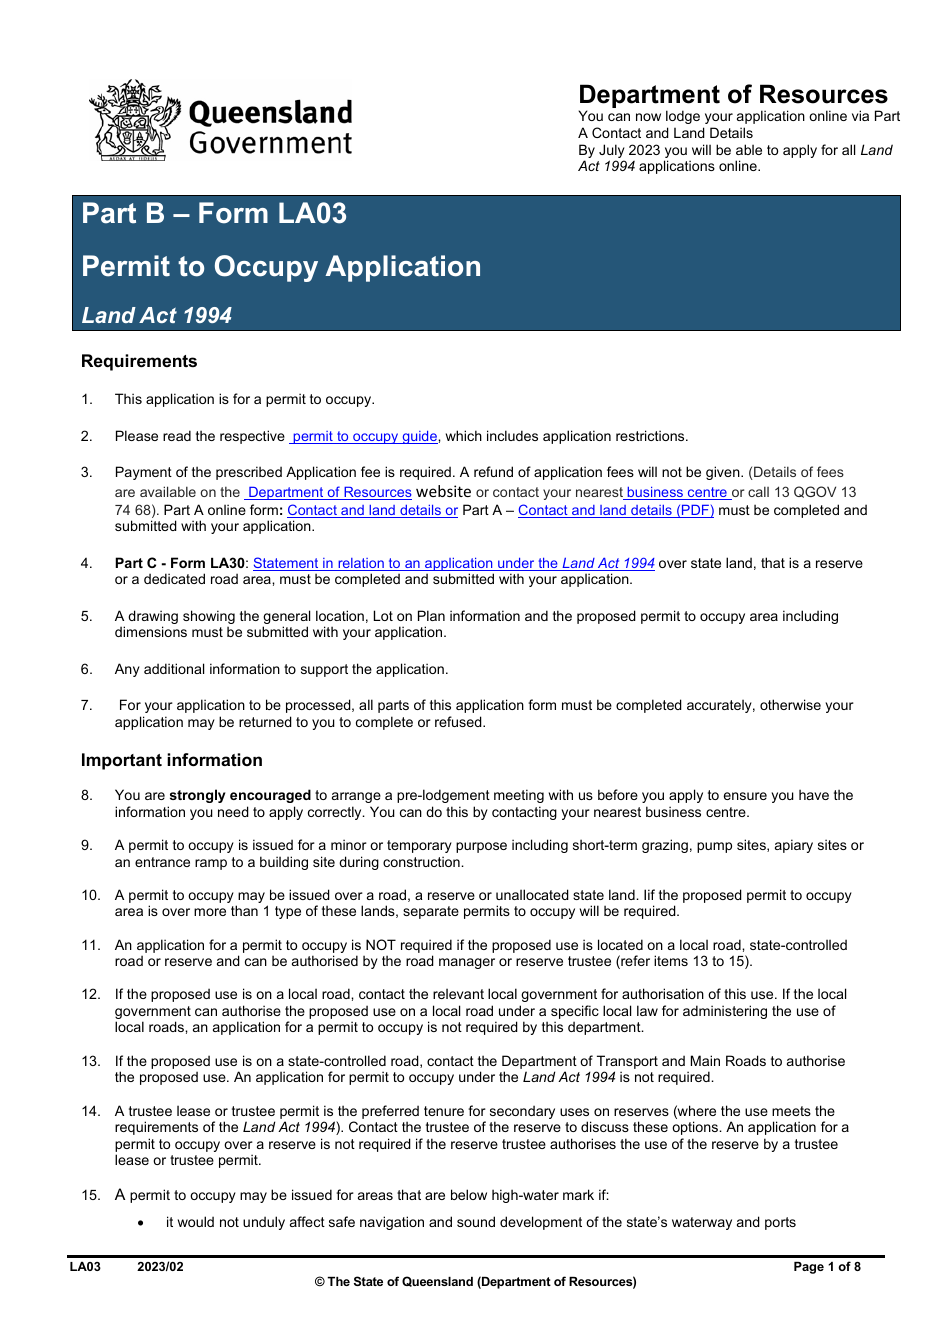 Form LA03 Part B Permit to Occupy Application - Queensland, Australia, Page 1